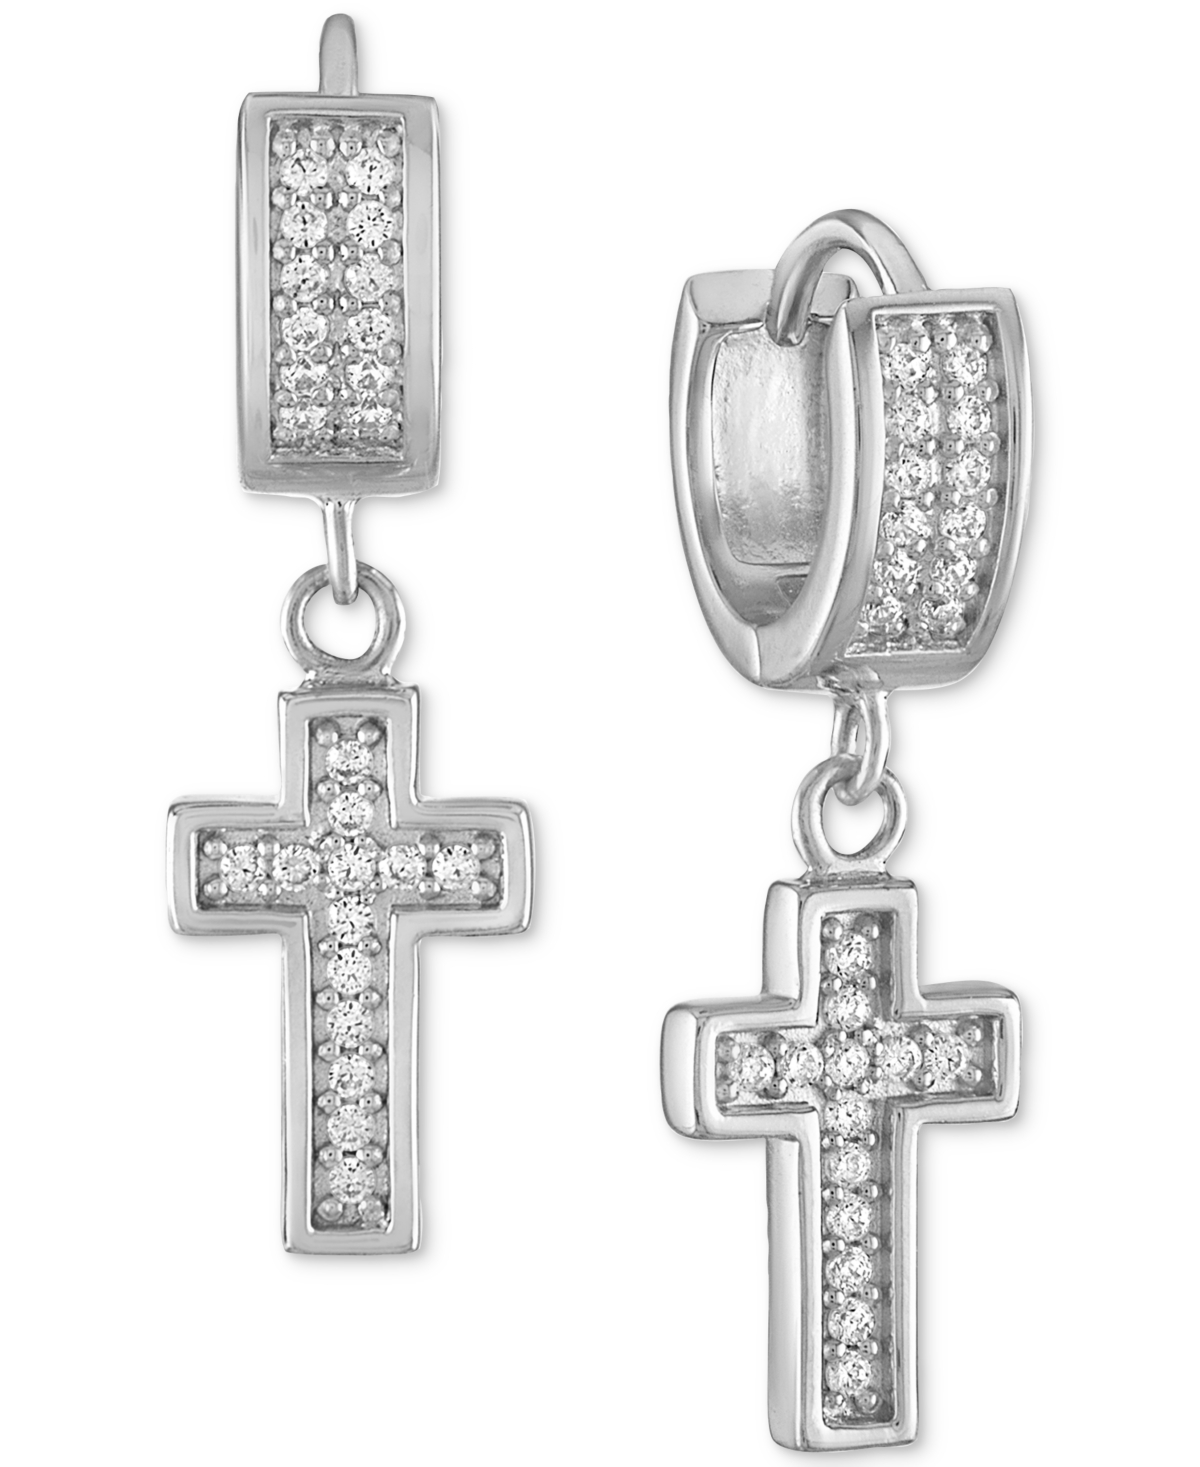 Esquire Men's Jewelry Cubic Zirconia Dangle Cross Huggie Hoop Earrings In Sterling Silver, Created For Macy's